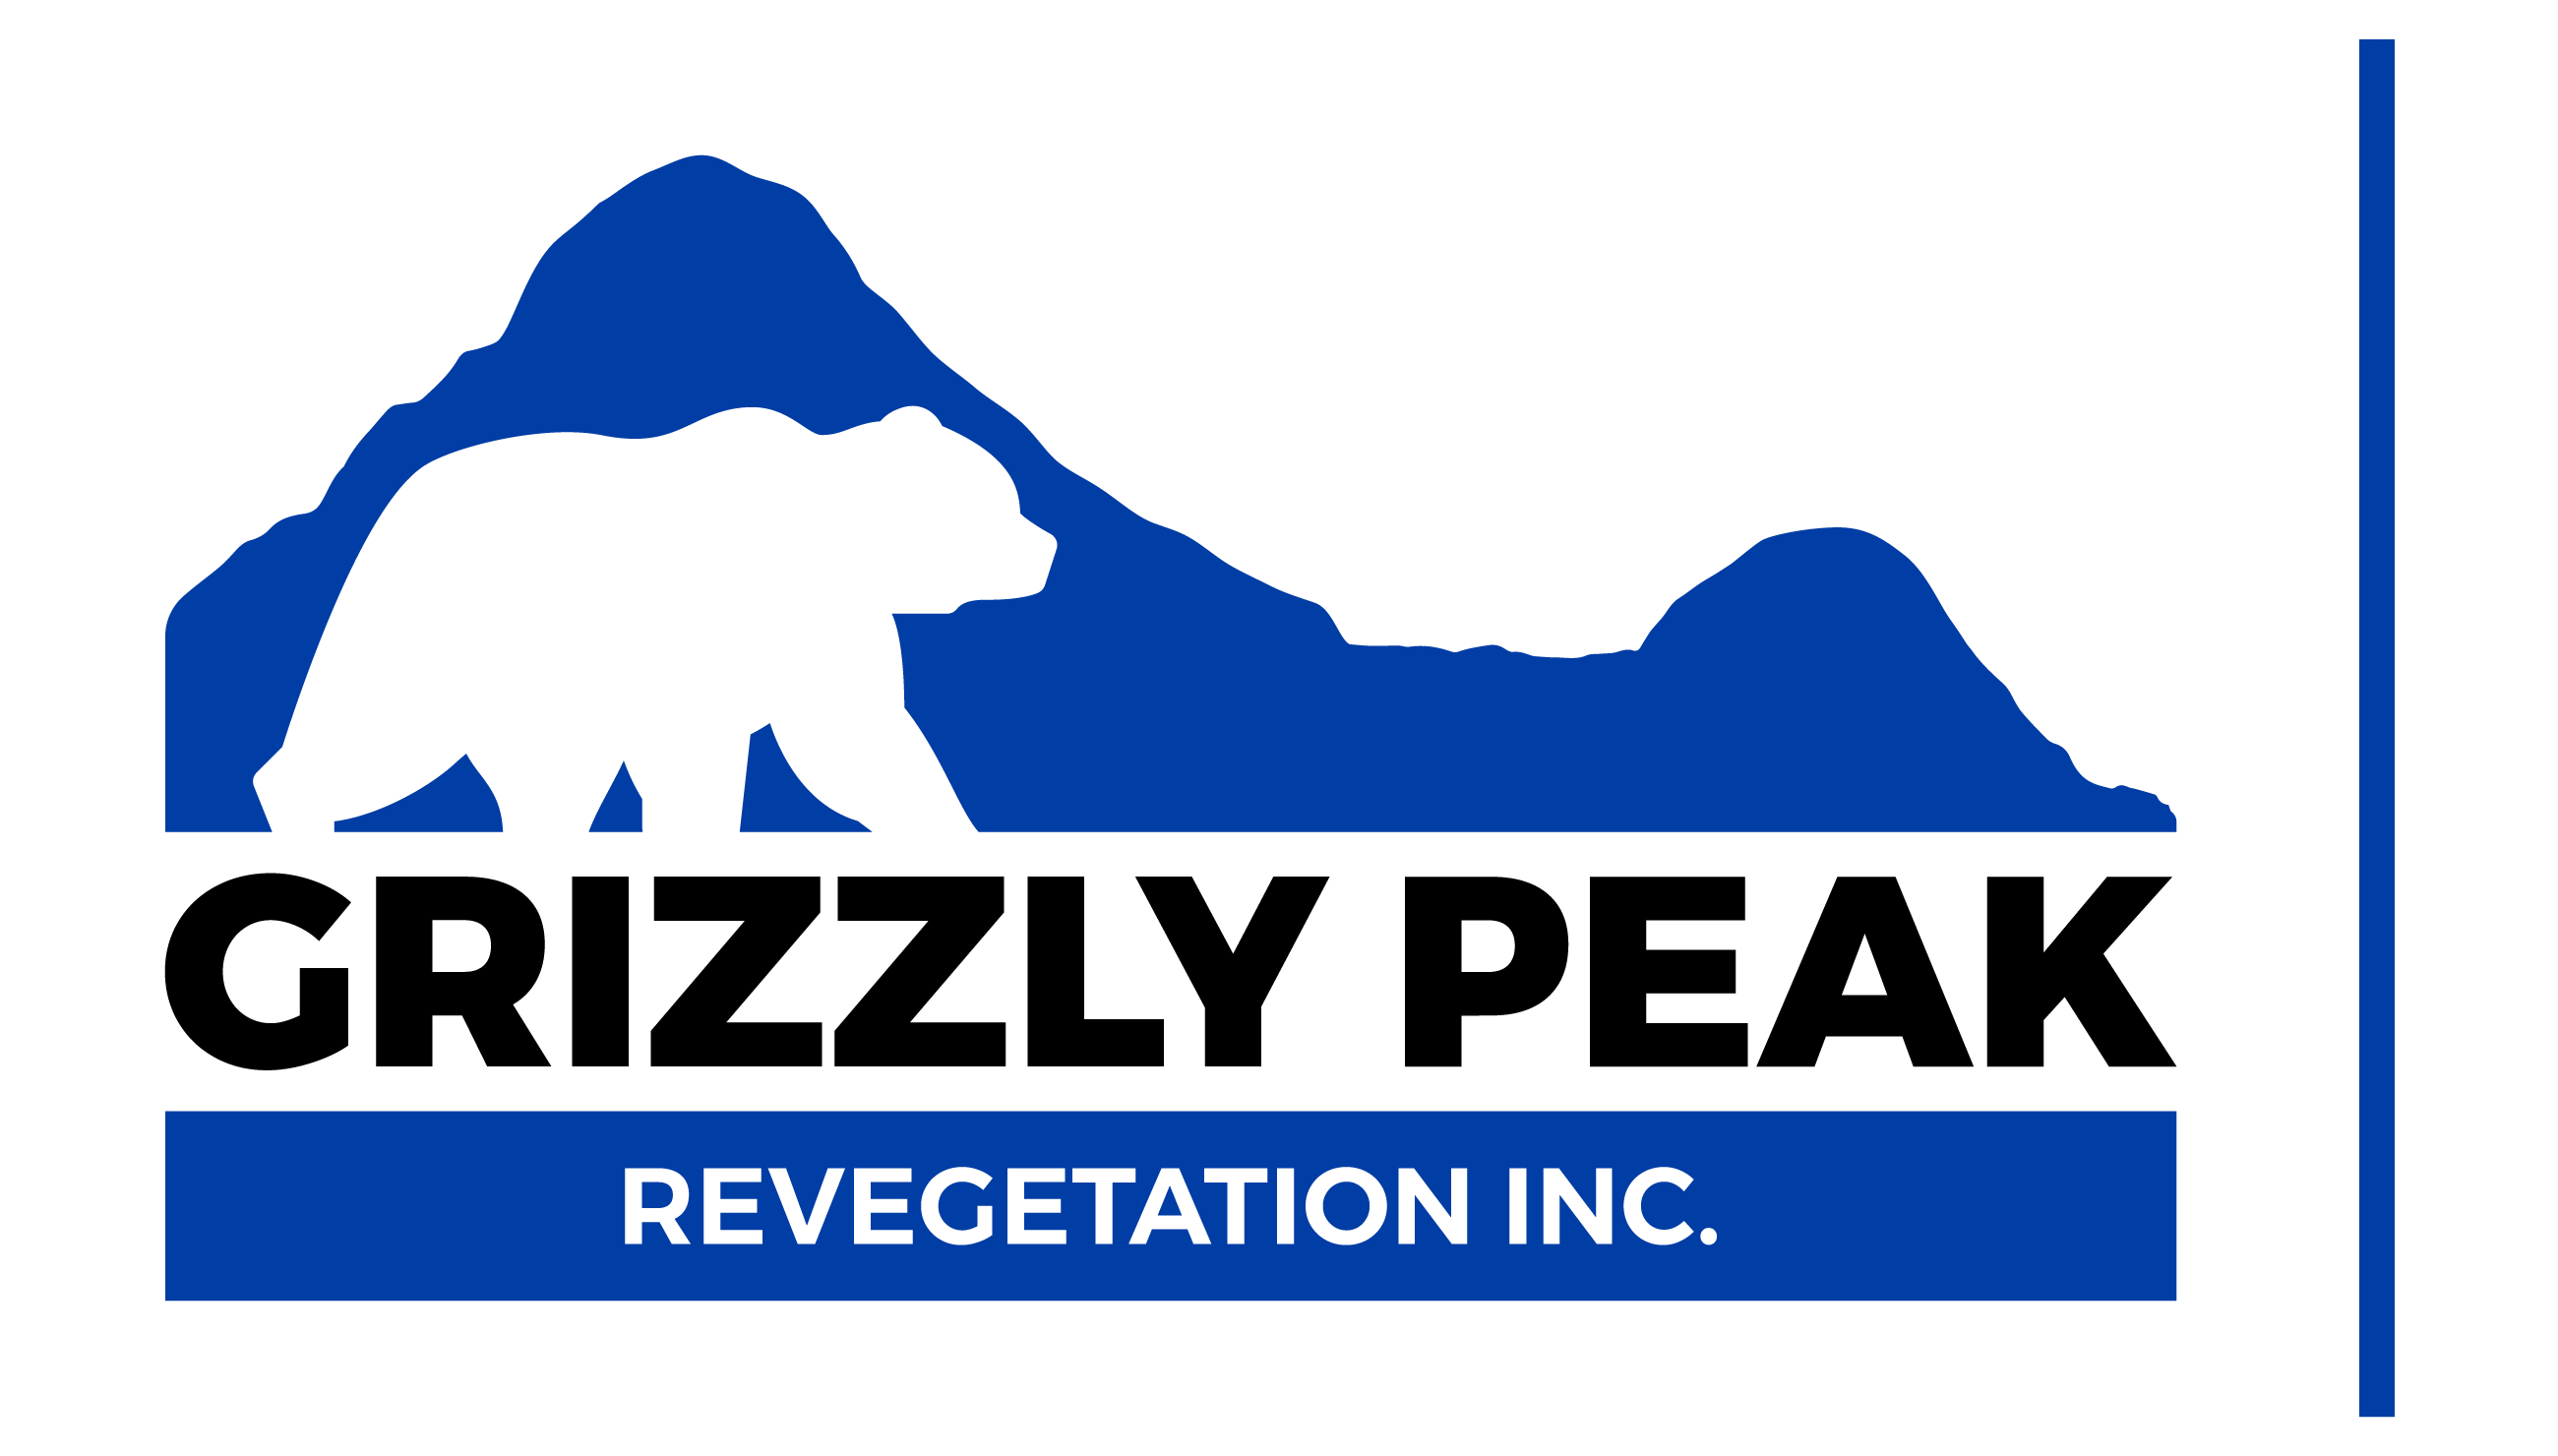 Grizzly Peak Revegetation Inc.